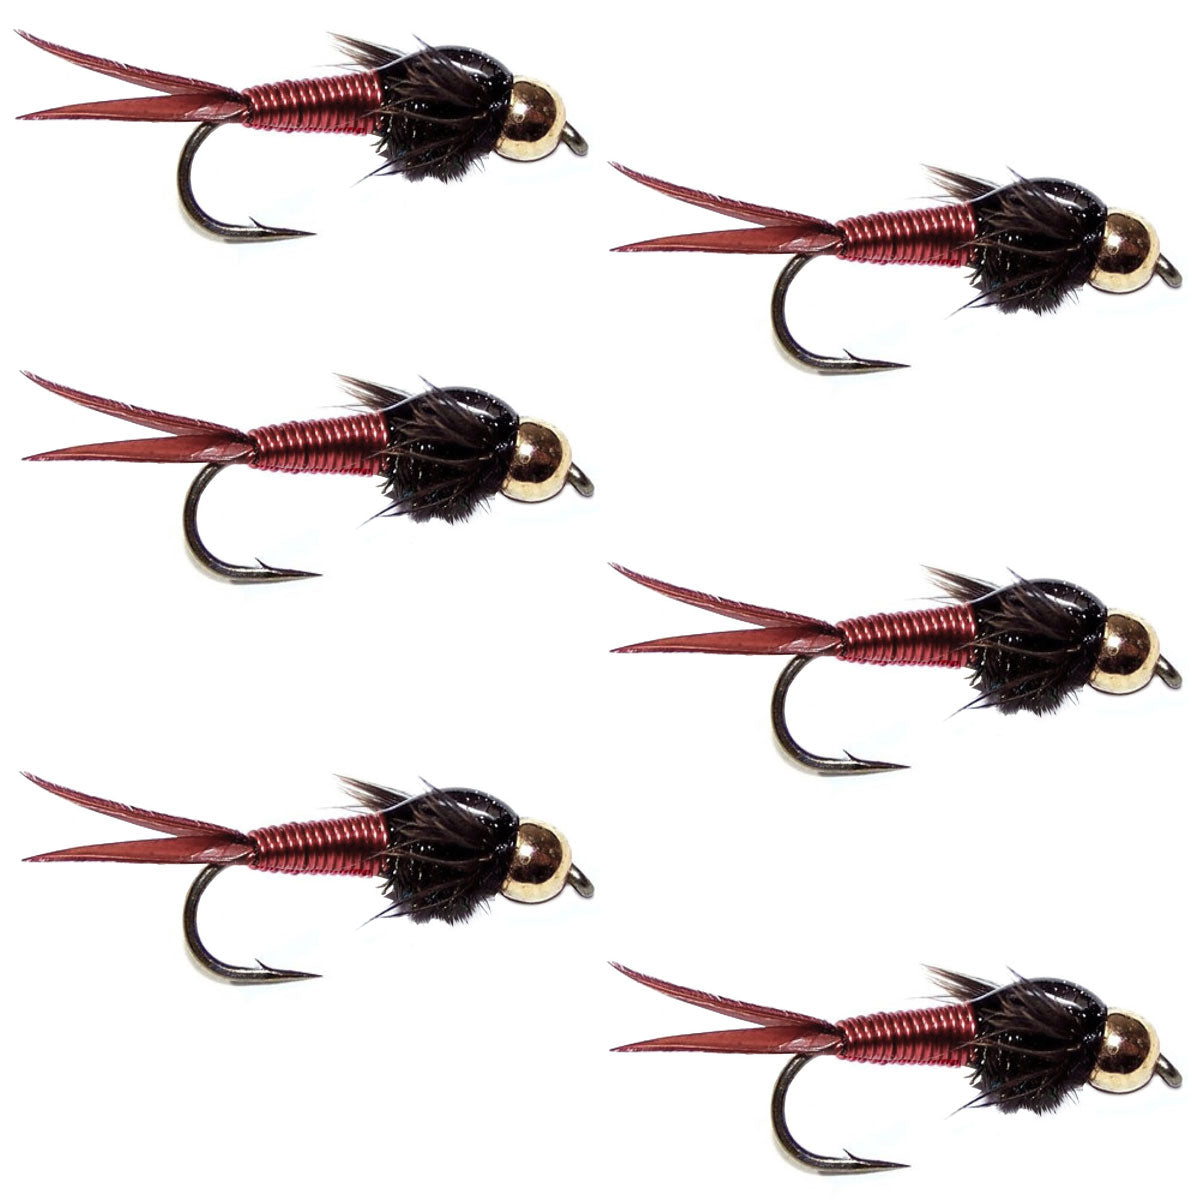 Bead Head Red Copper John Nymph Fly 6 Flies -  Hook Size 12